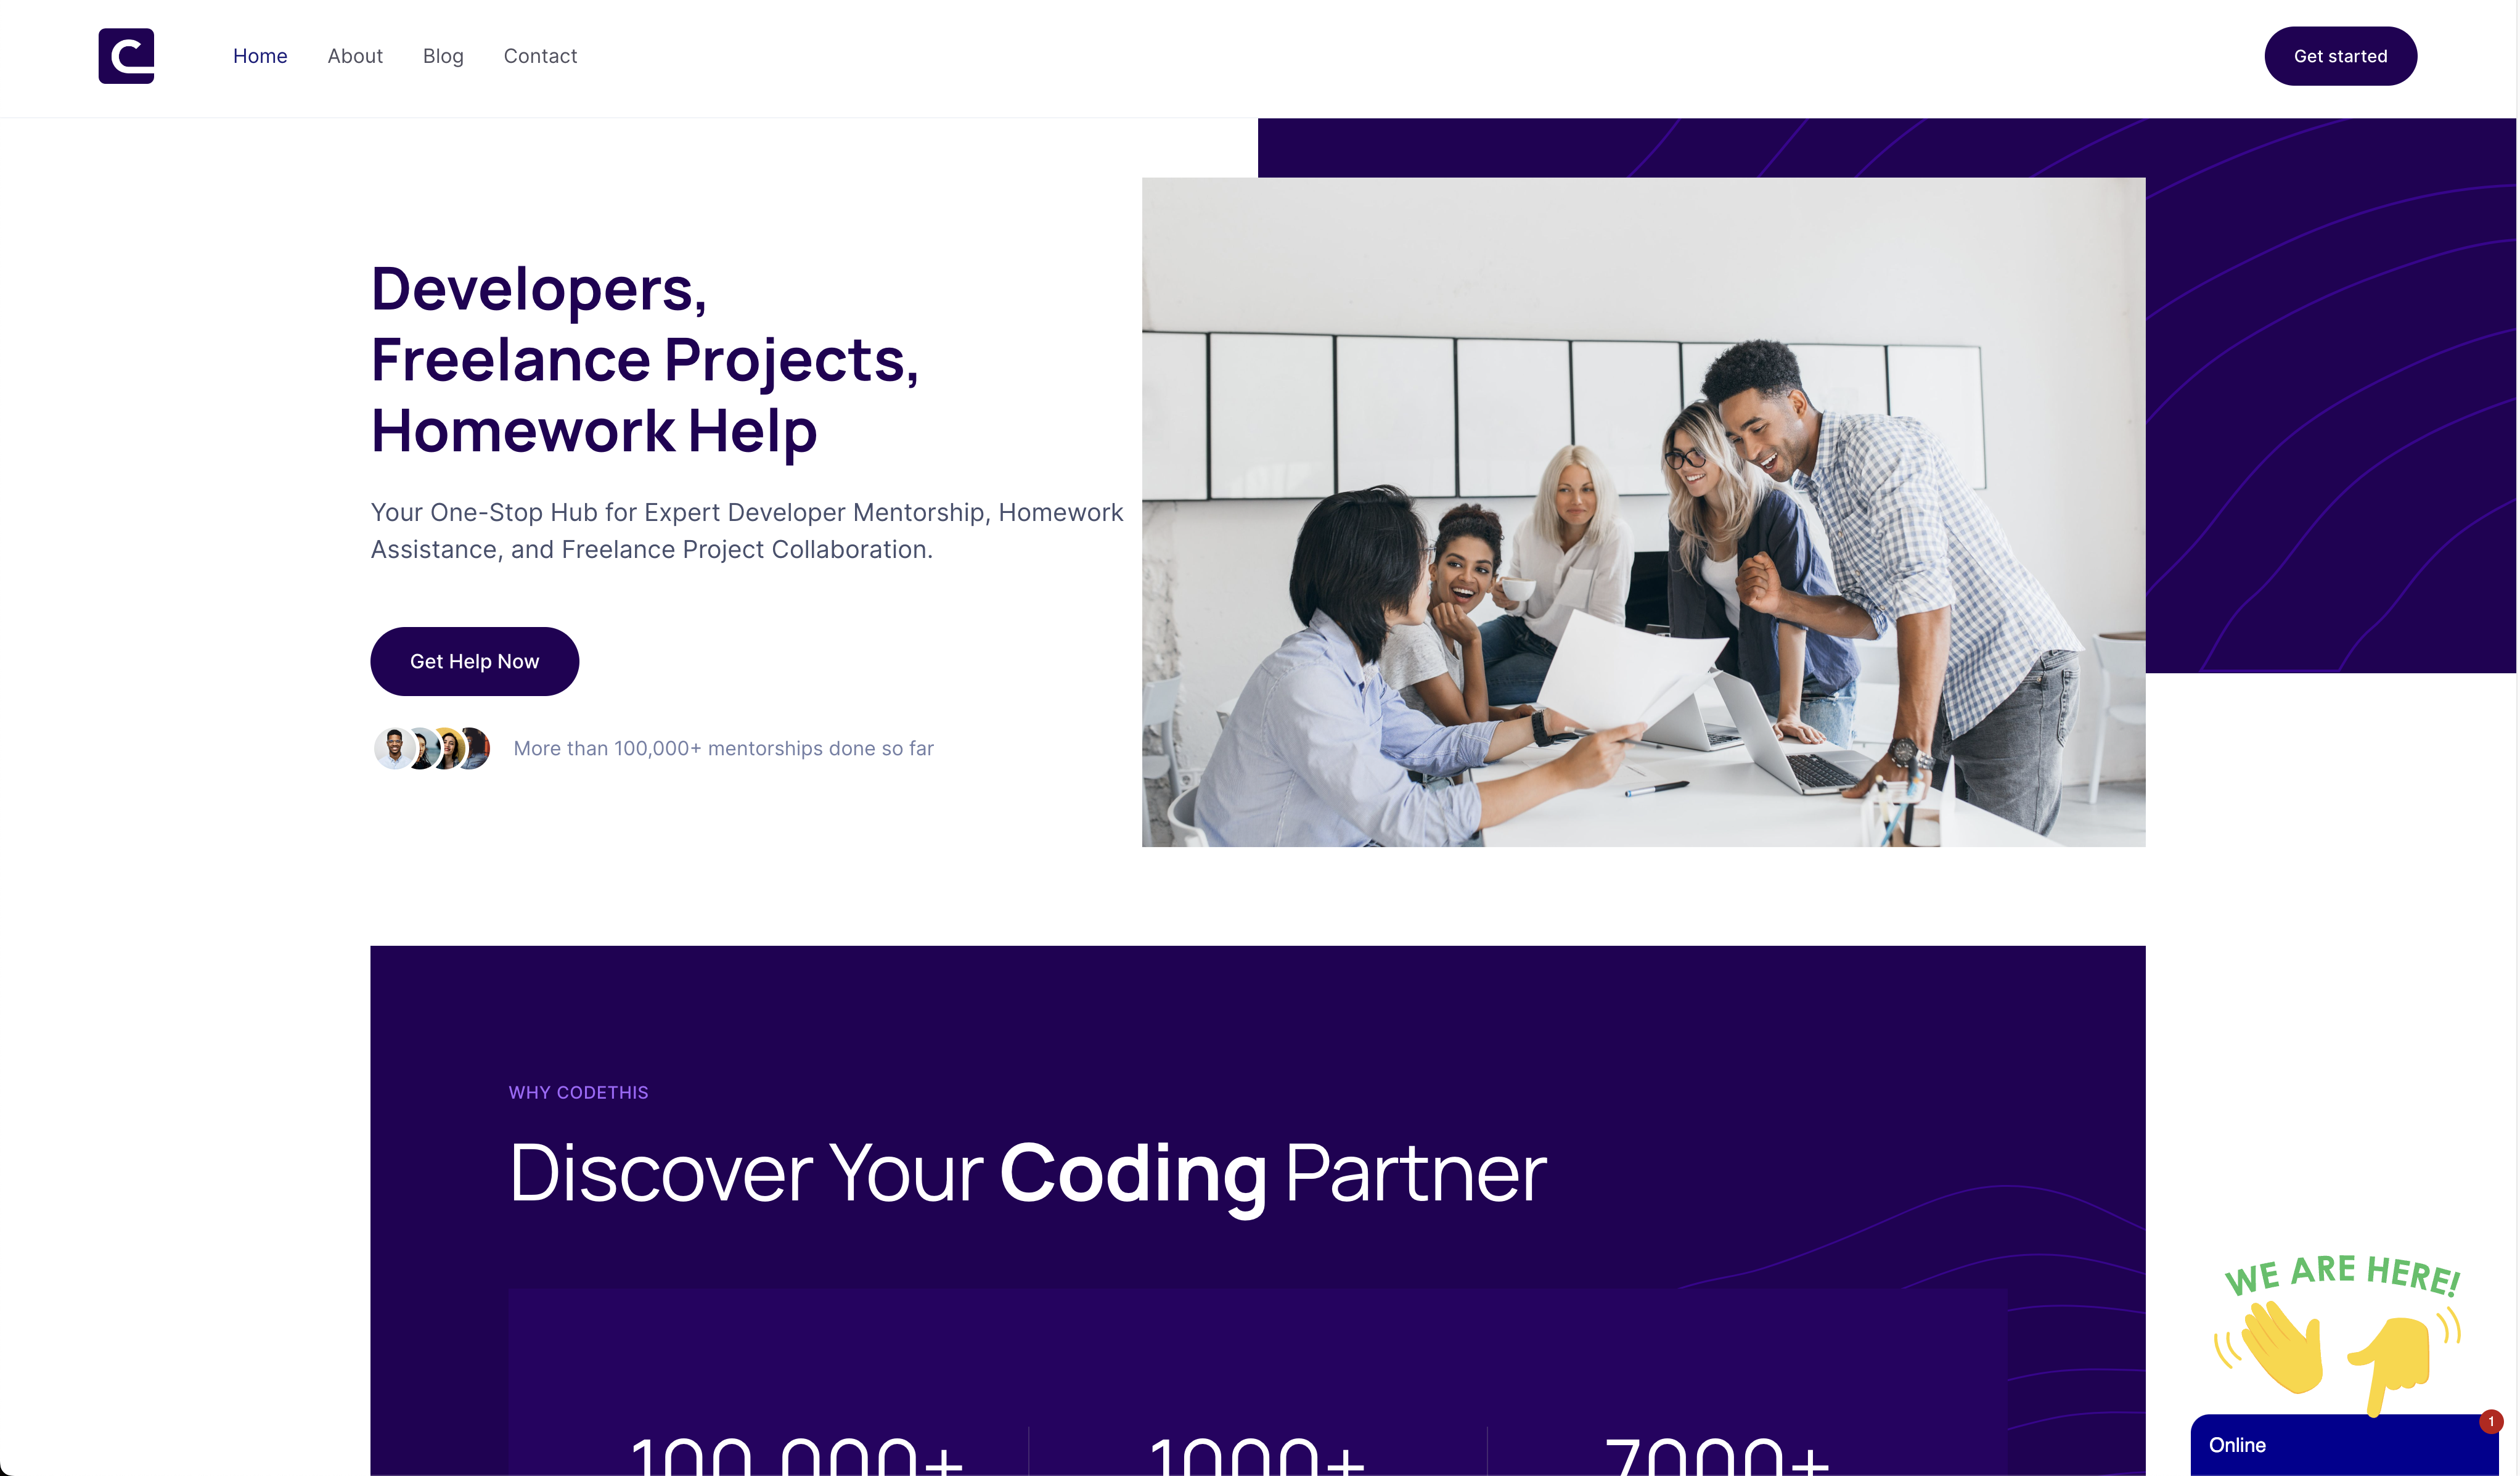 startuptile Codethis-Developers Freelance Projects Homework Help